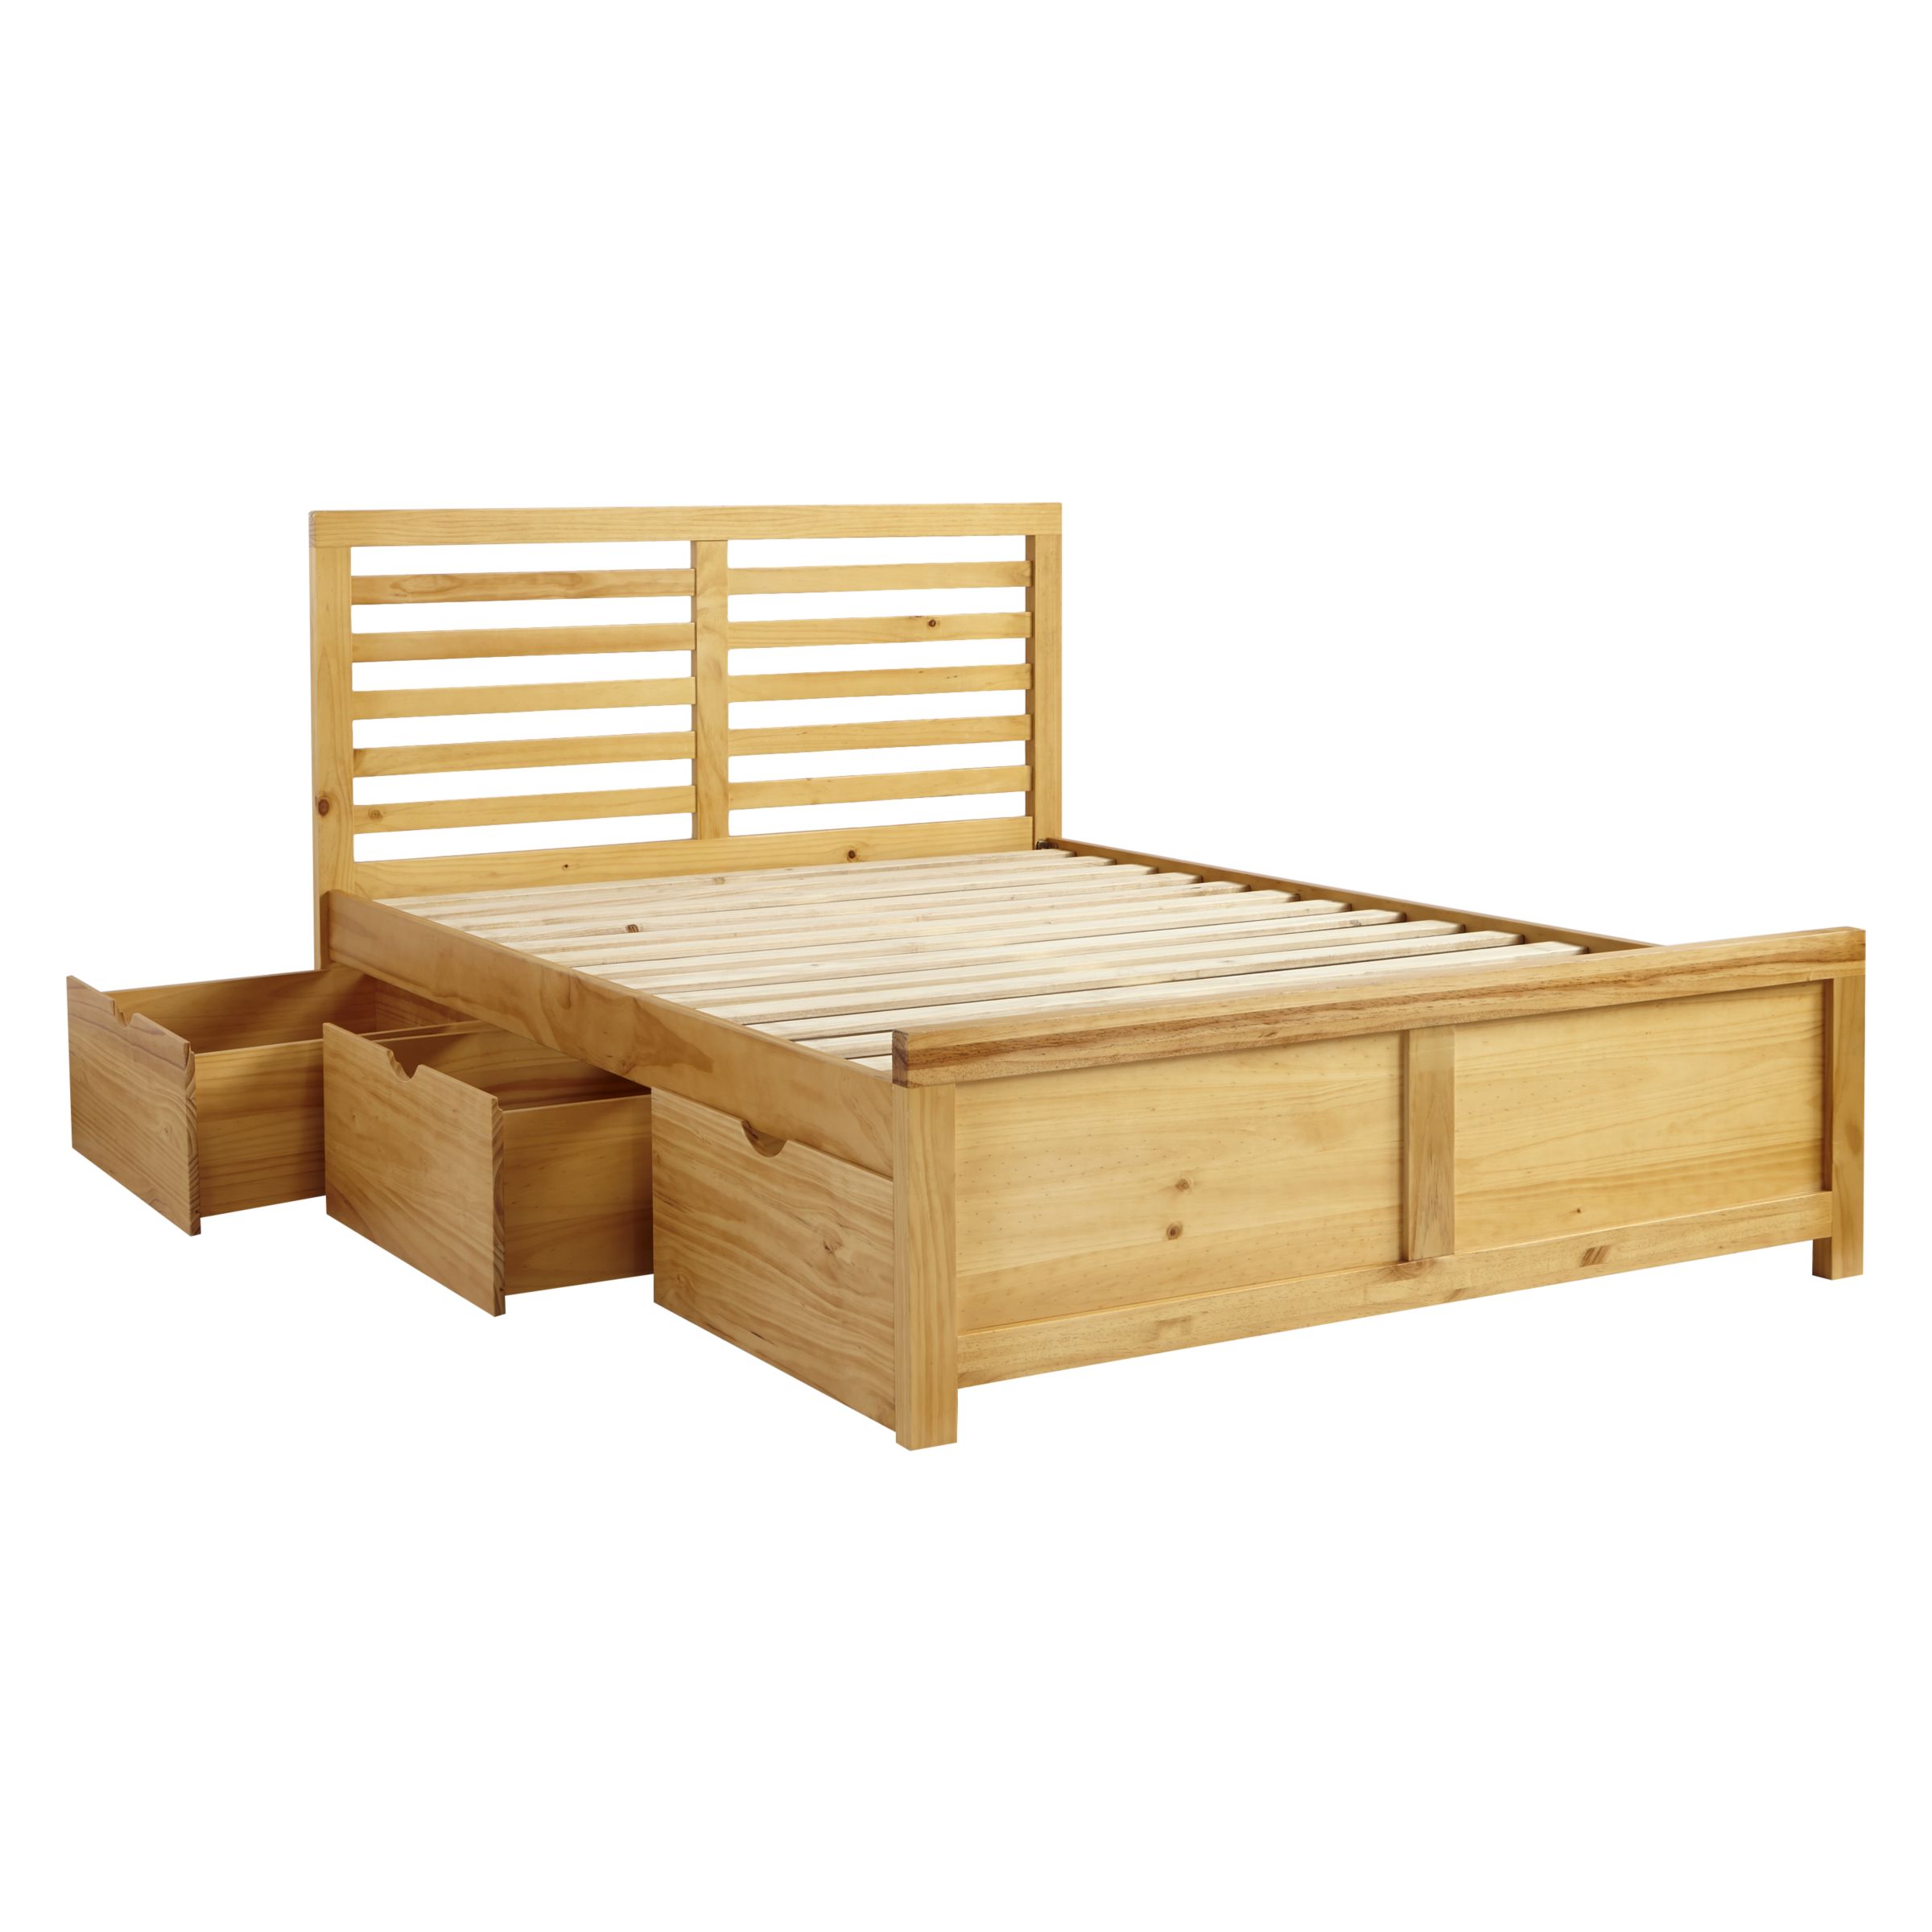 John Lewis Nevada Storage Bed King Size, Storage Bed King Size Wood